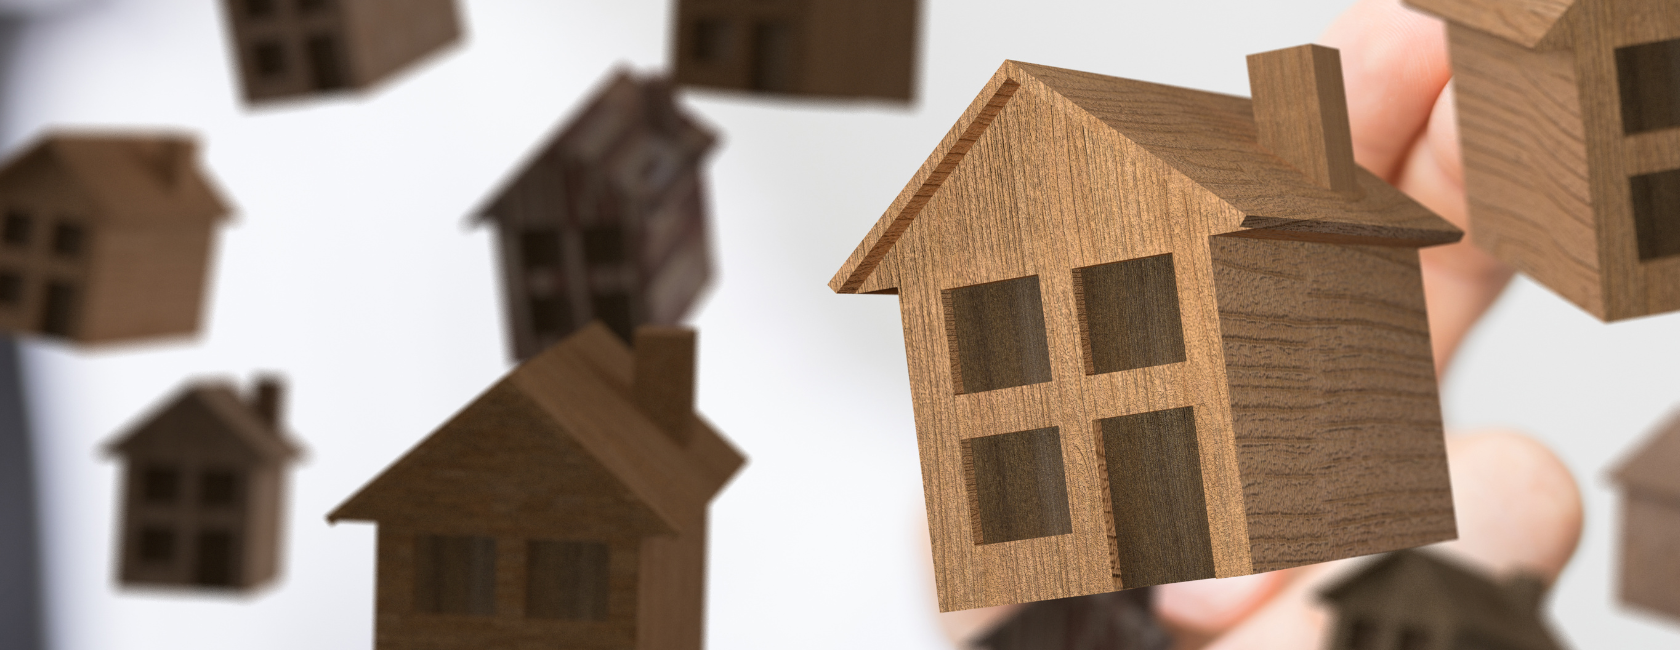 Regional housing prices bust